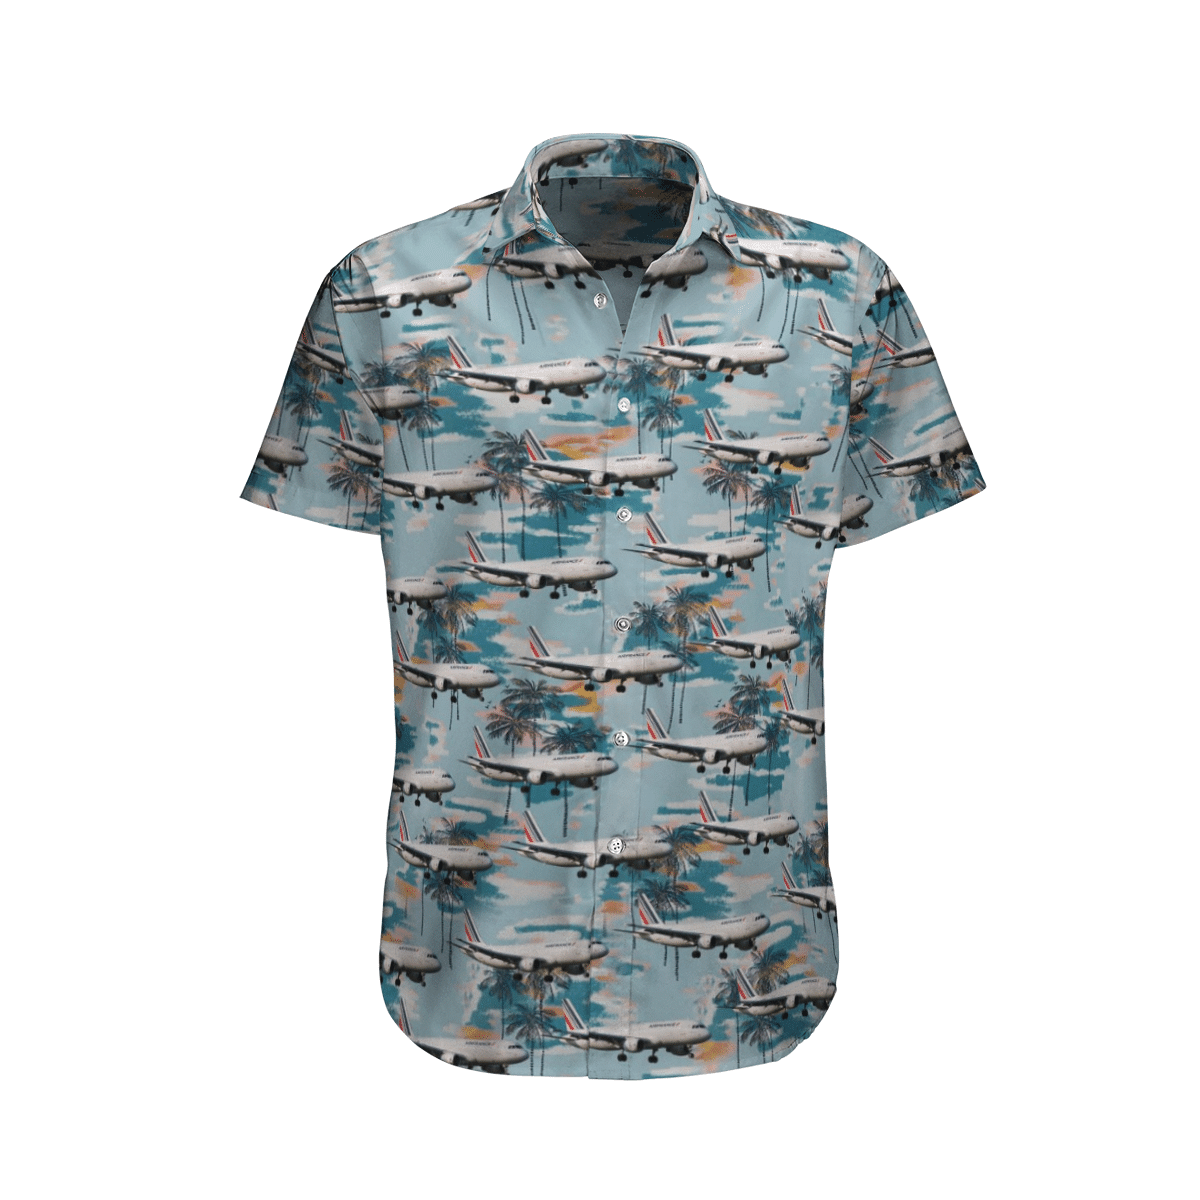 Get a new Hawaiian shirt to enjoy summer vacation 58